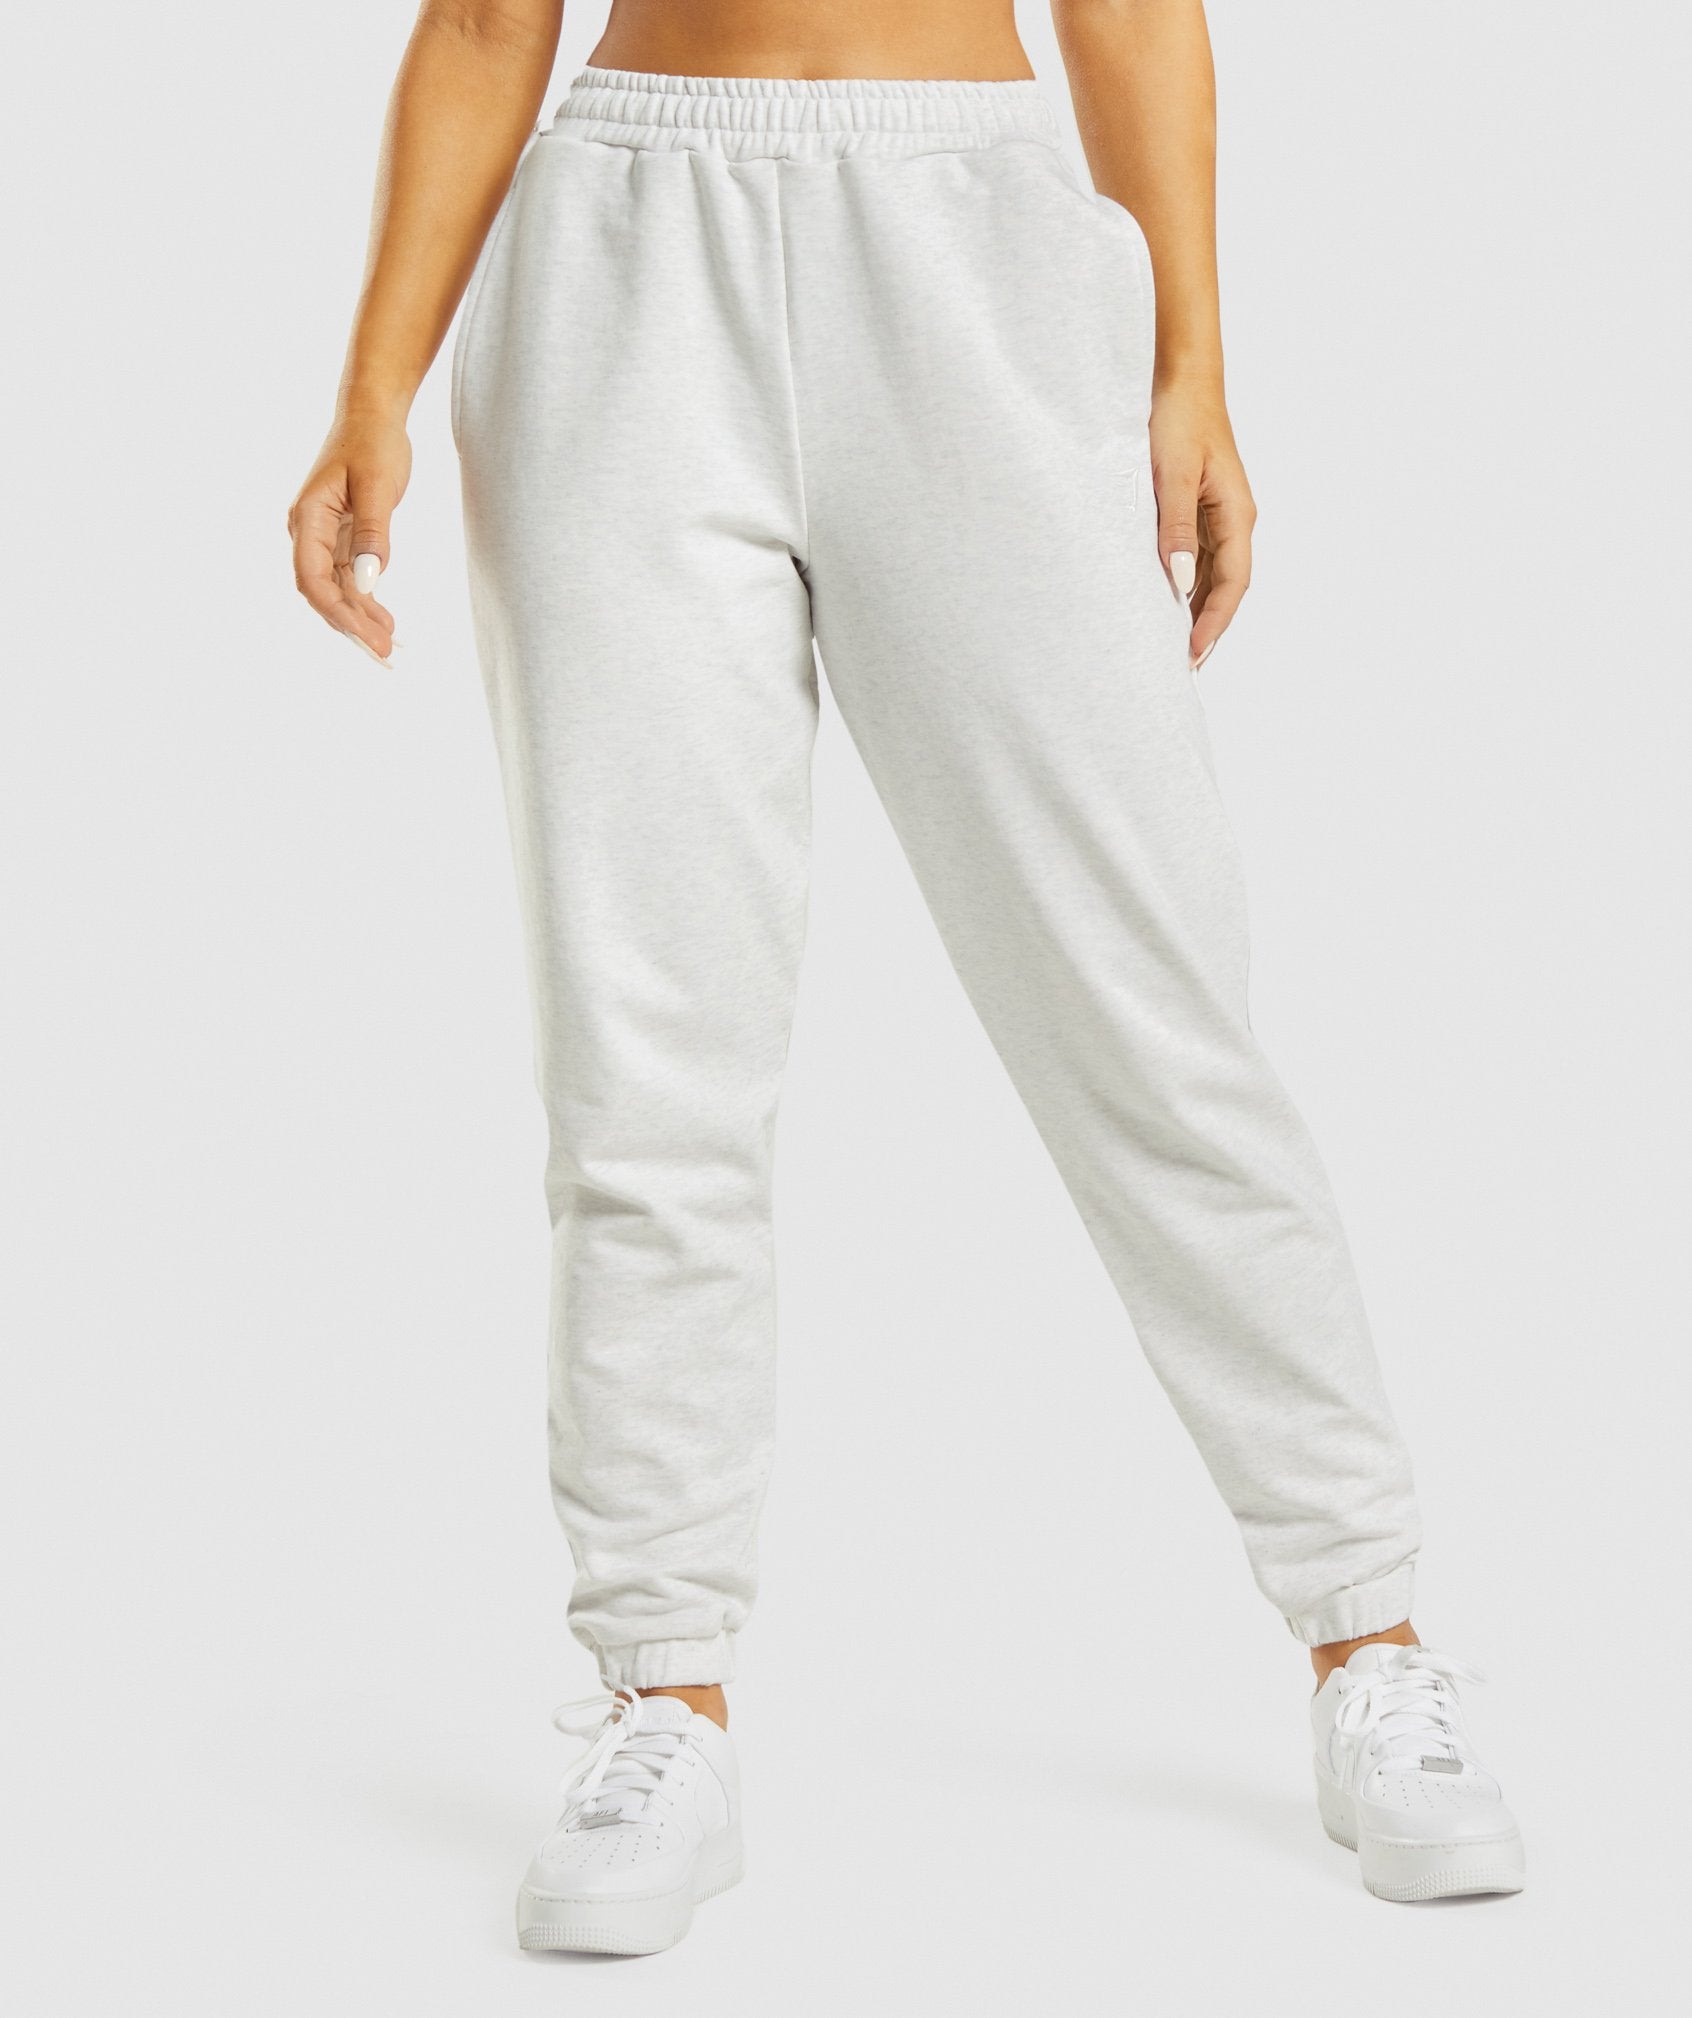 GYMSHARK JOGGERS WOMEN'S Size Small Black Sweatpants Drawstring Pockets  $24.95 - PicClick